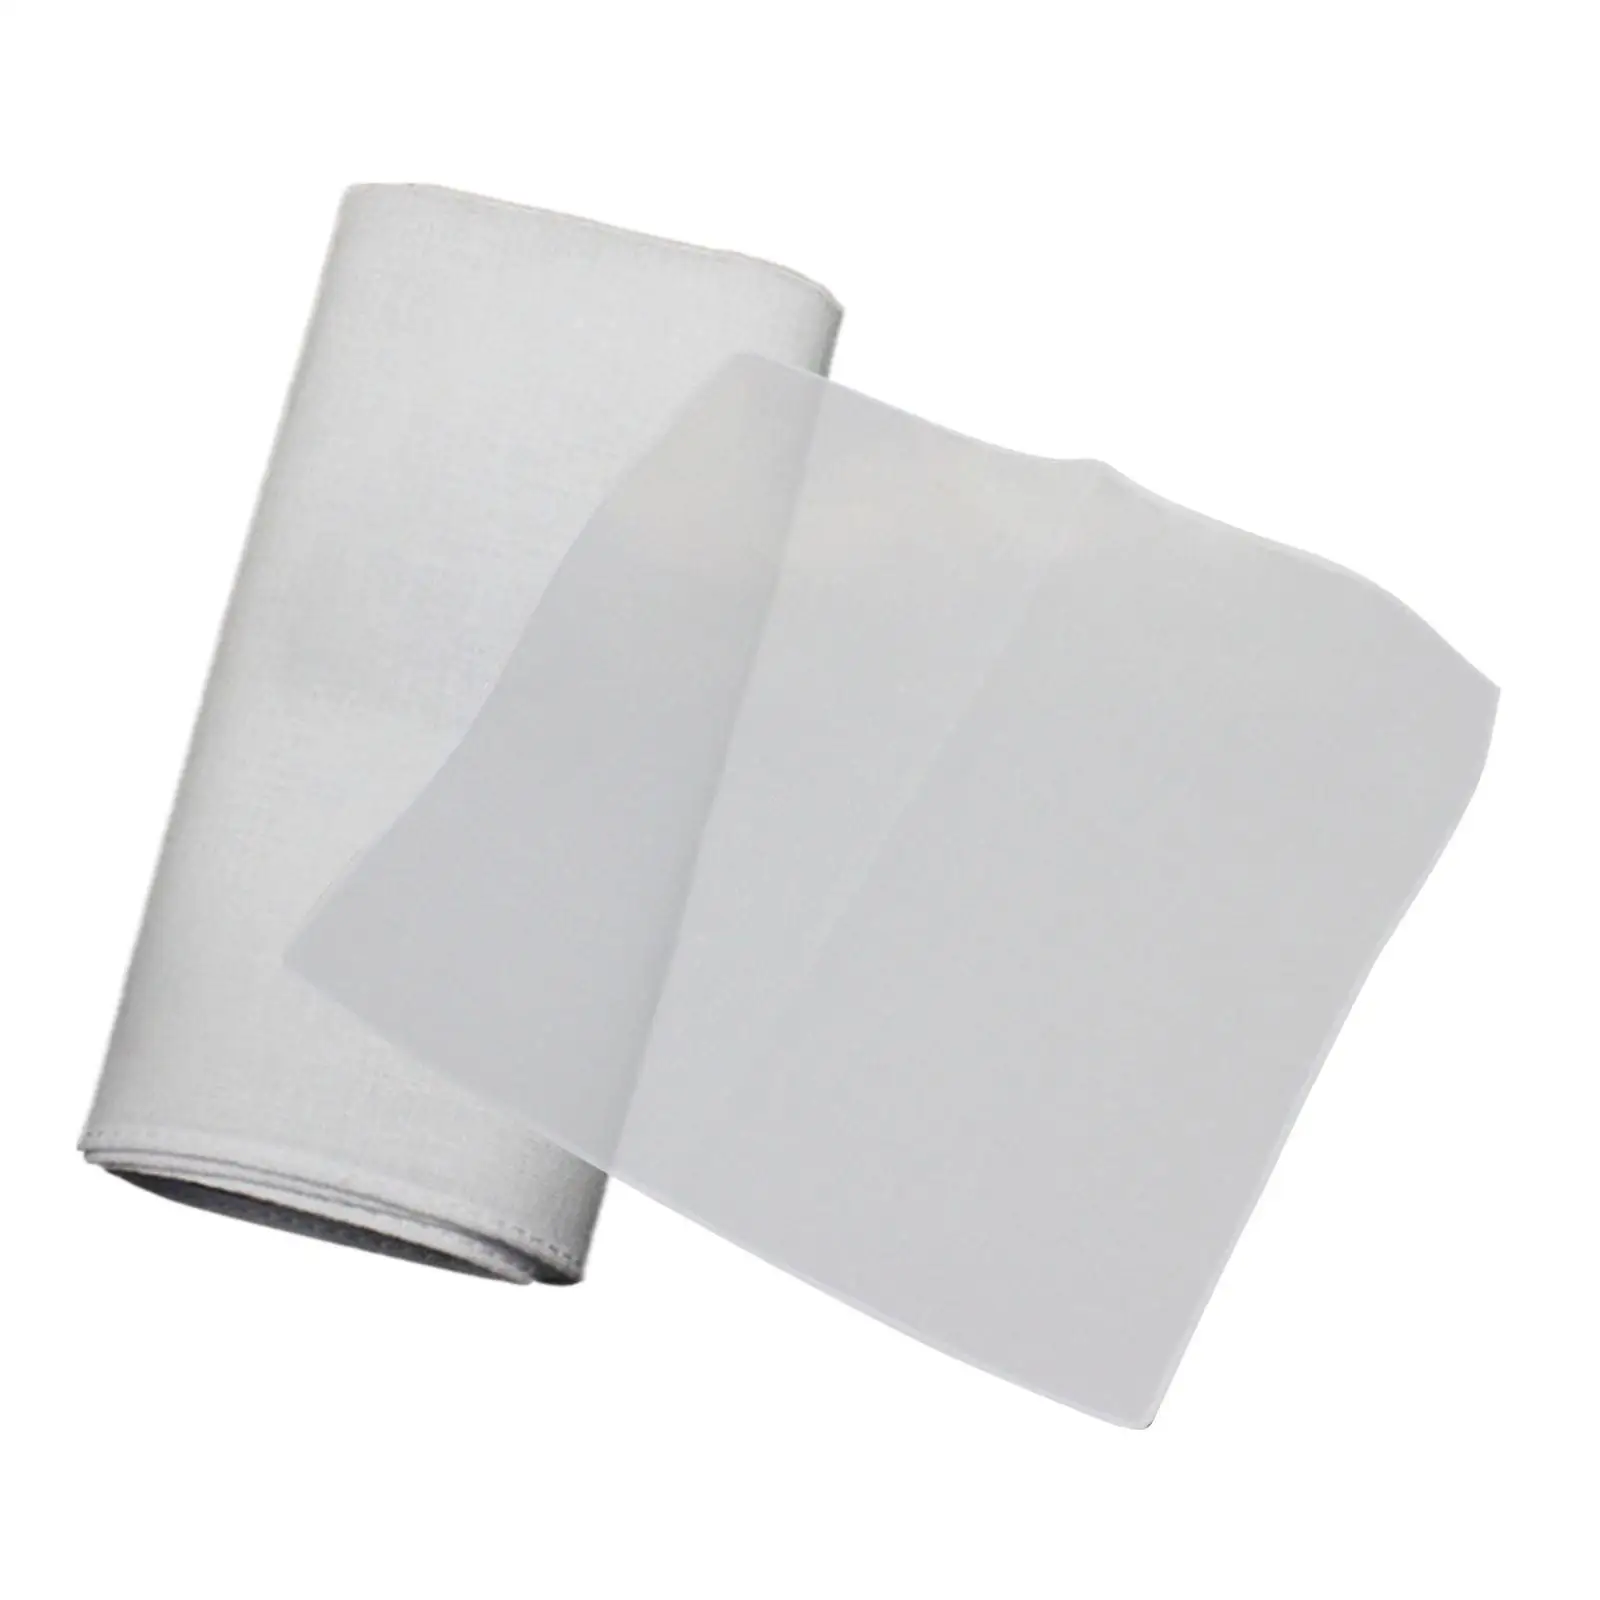 10Pcs Blank White Handkerchiefs for Men Women 42S Cotton 10 inch Soft Classic White Hankies for DIY Handmade Crafts Tie Dye